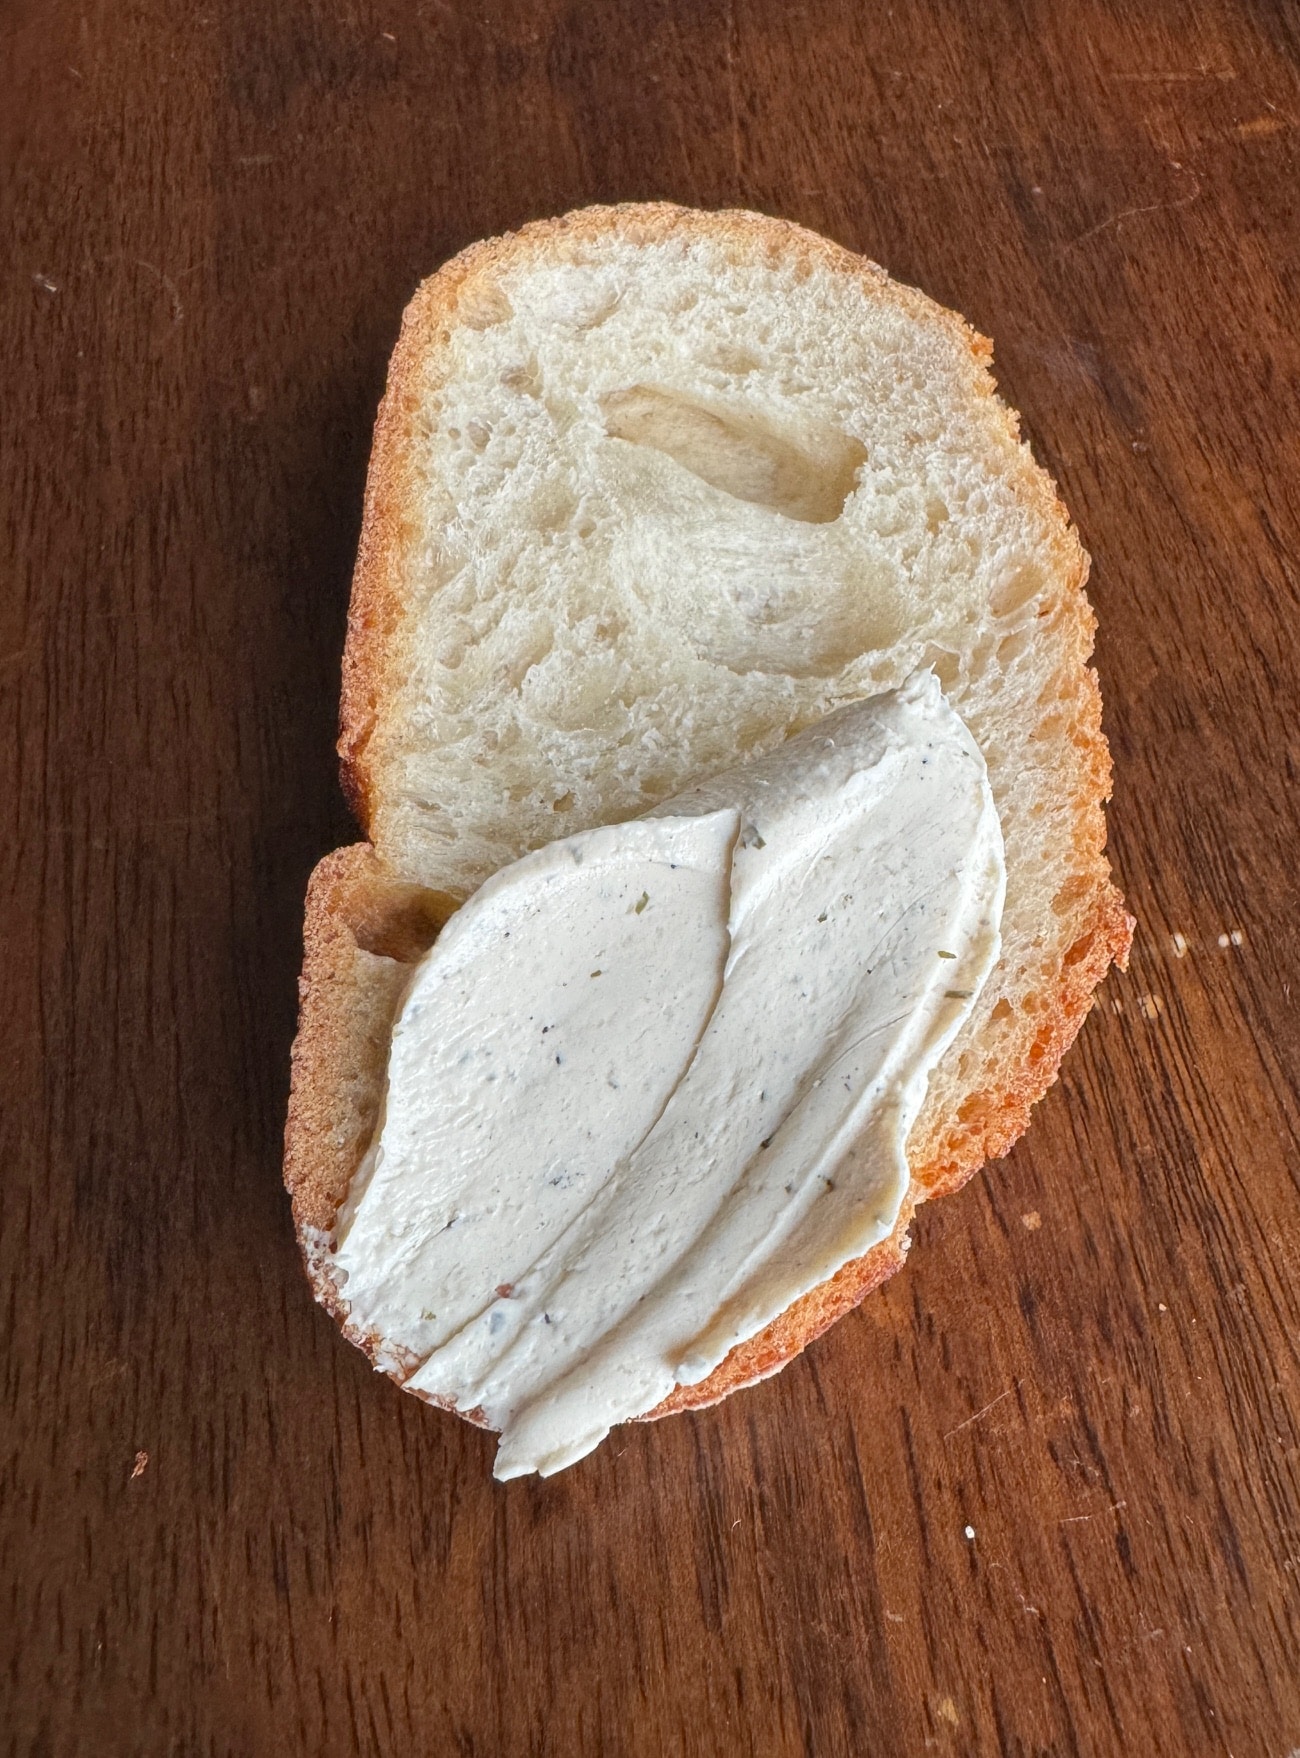 Trader Joe's Black Garlic Cream Cheese Spread on bread